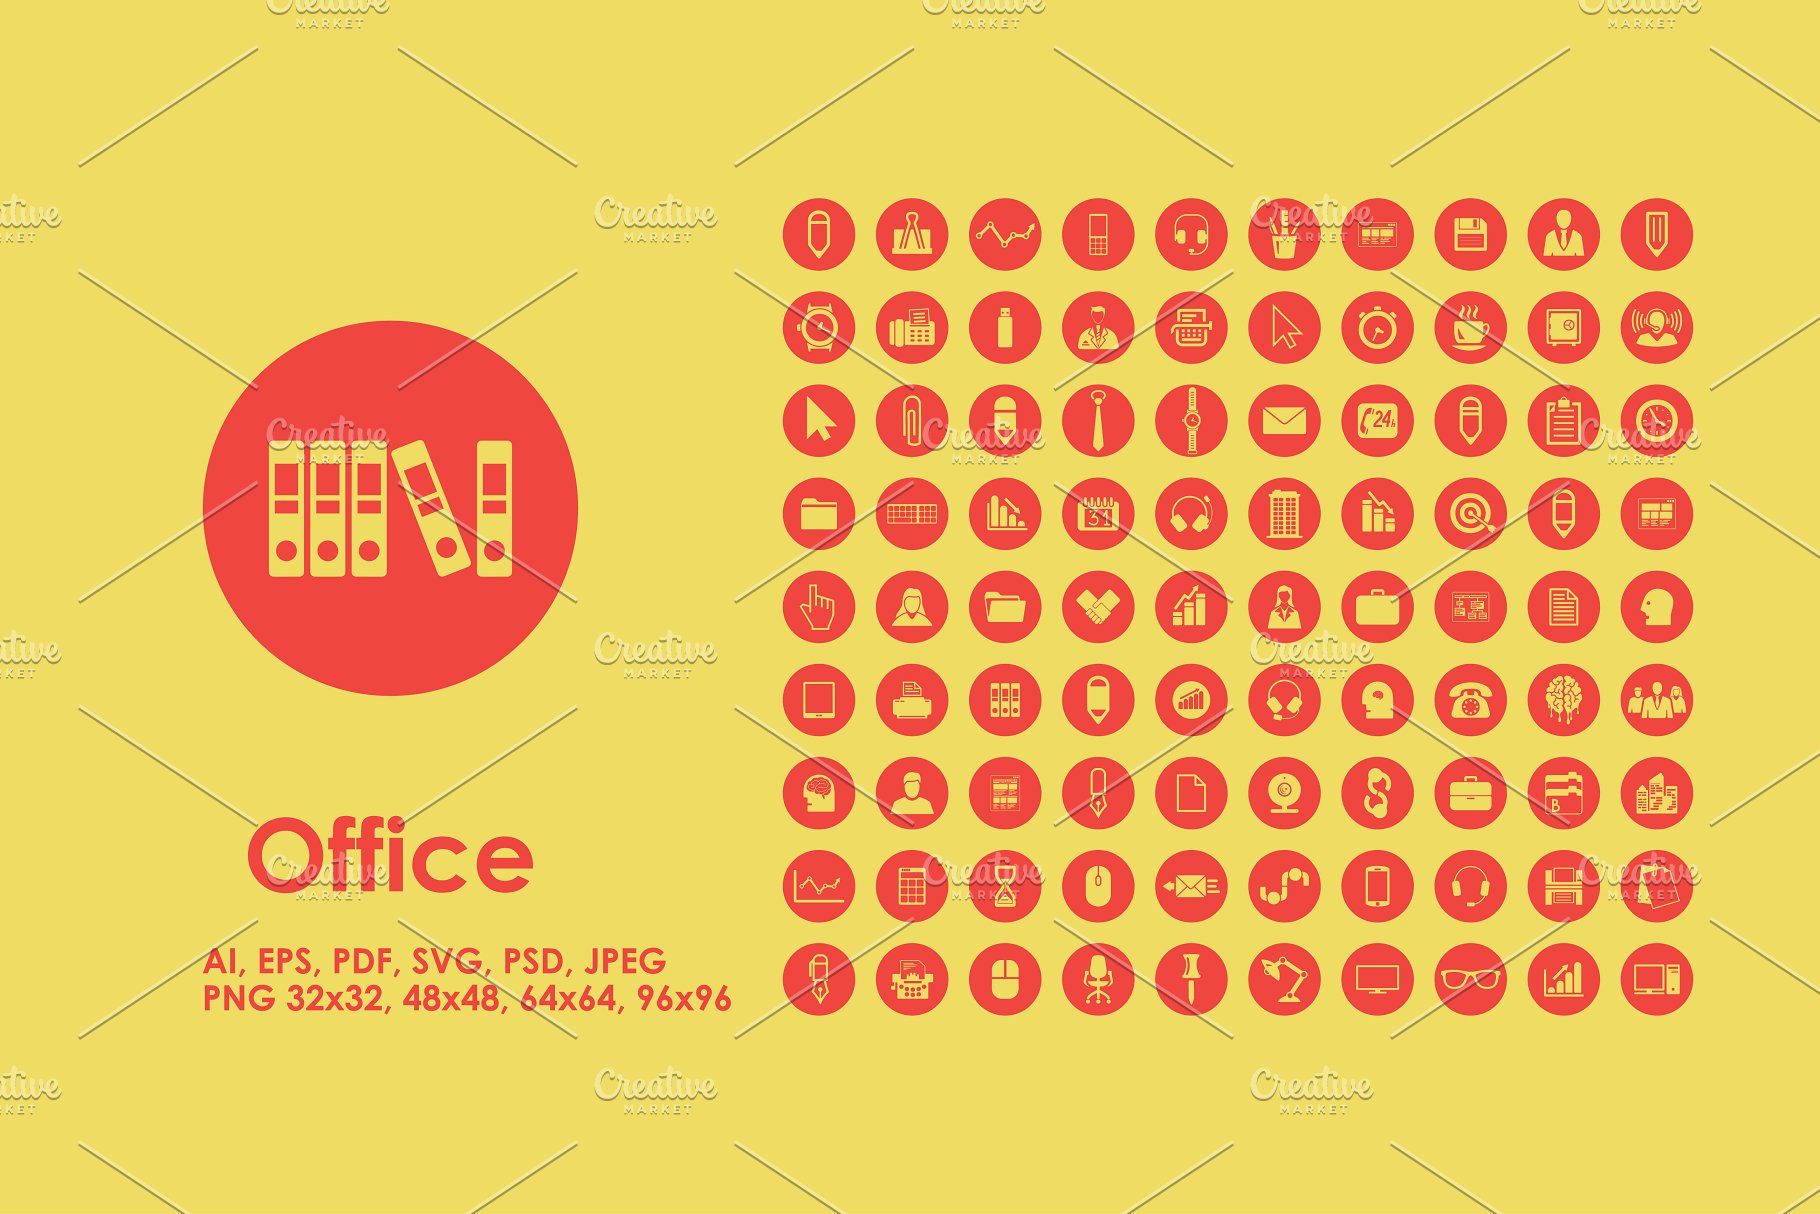 办公室矢量图标下载 Office icons #136910